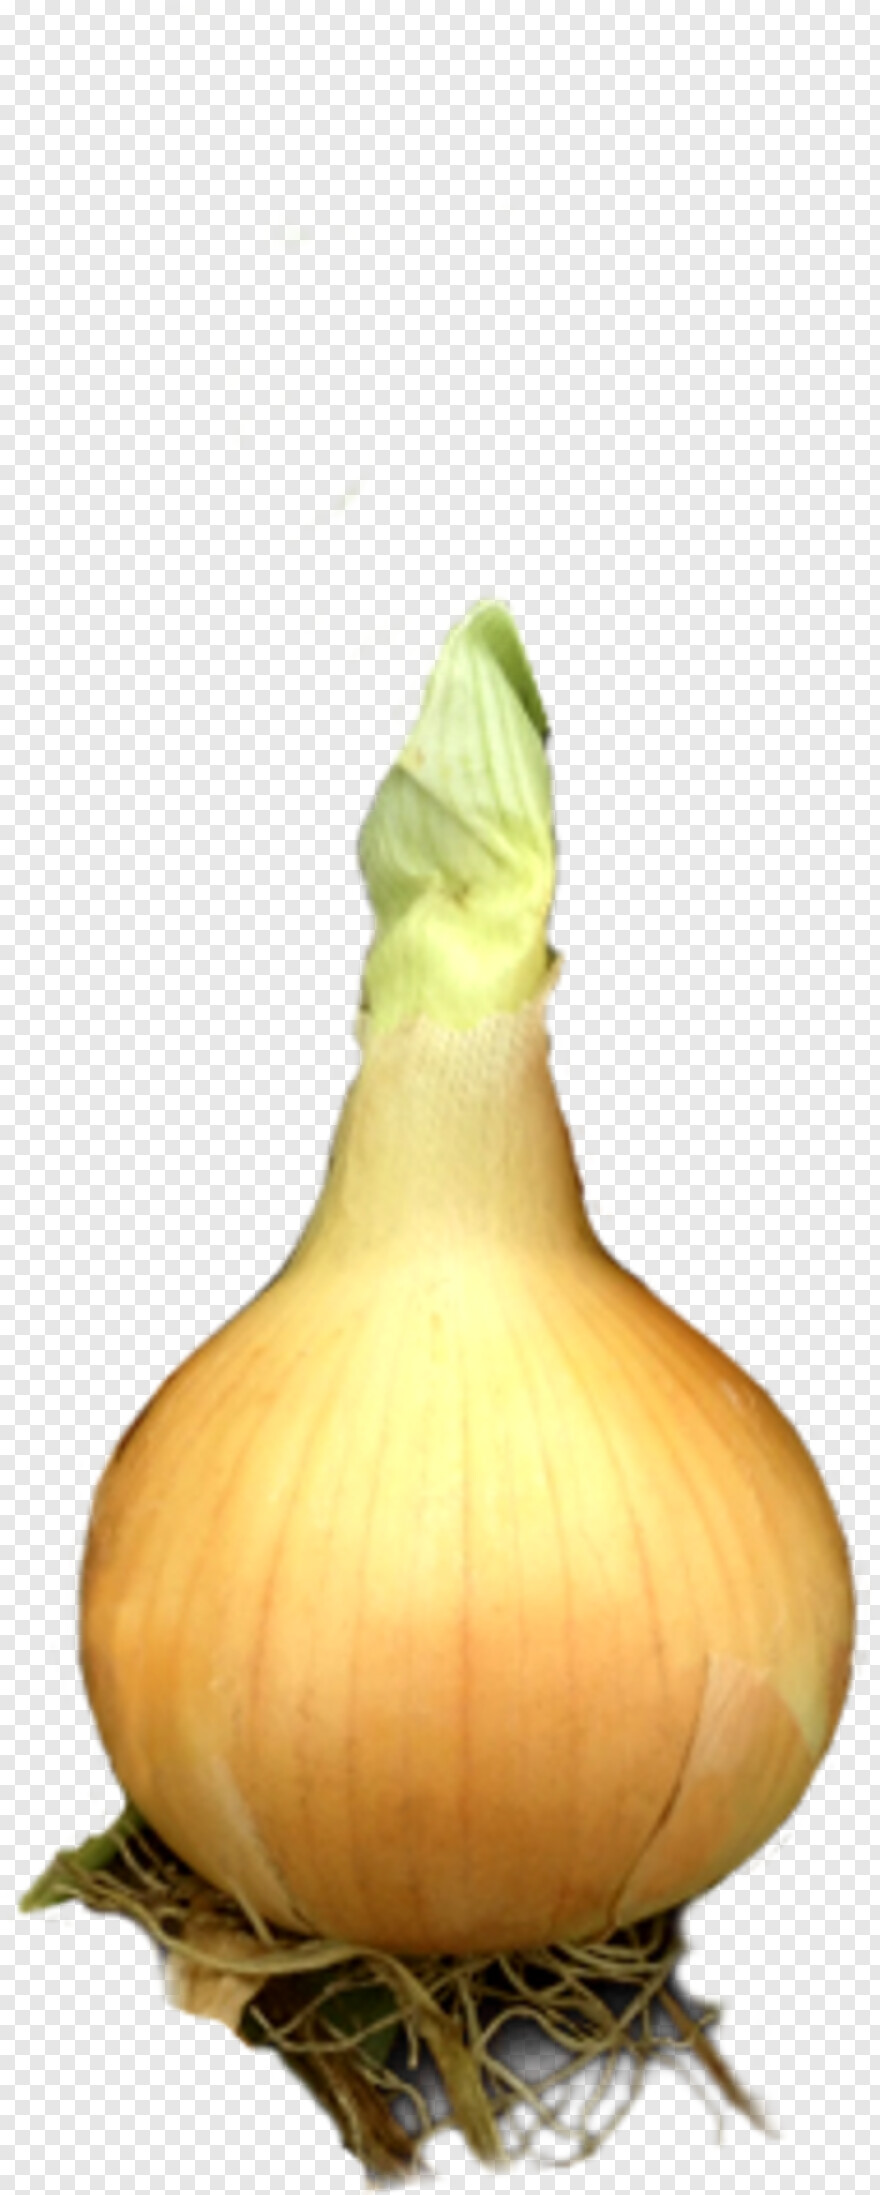 onion # 670319